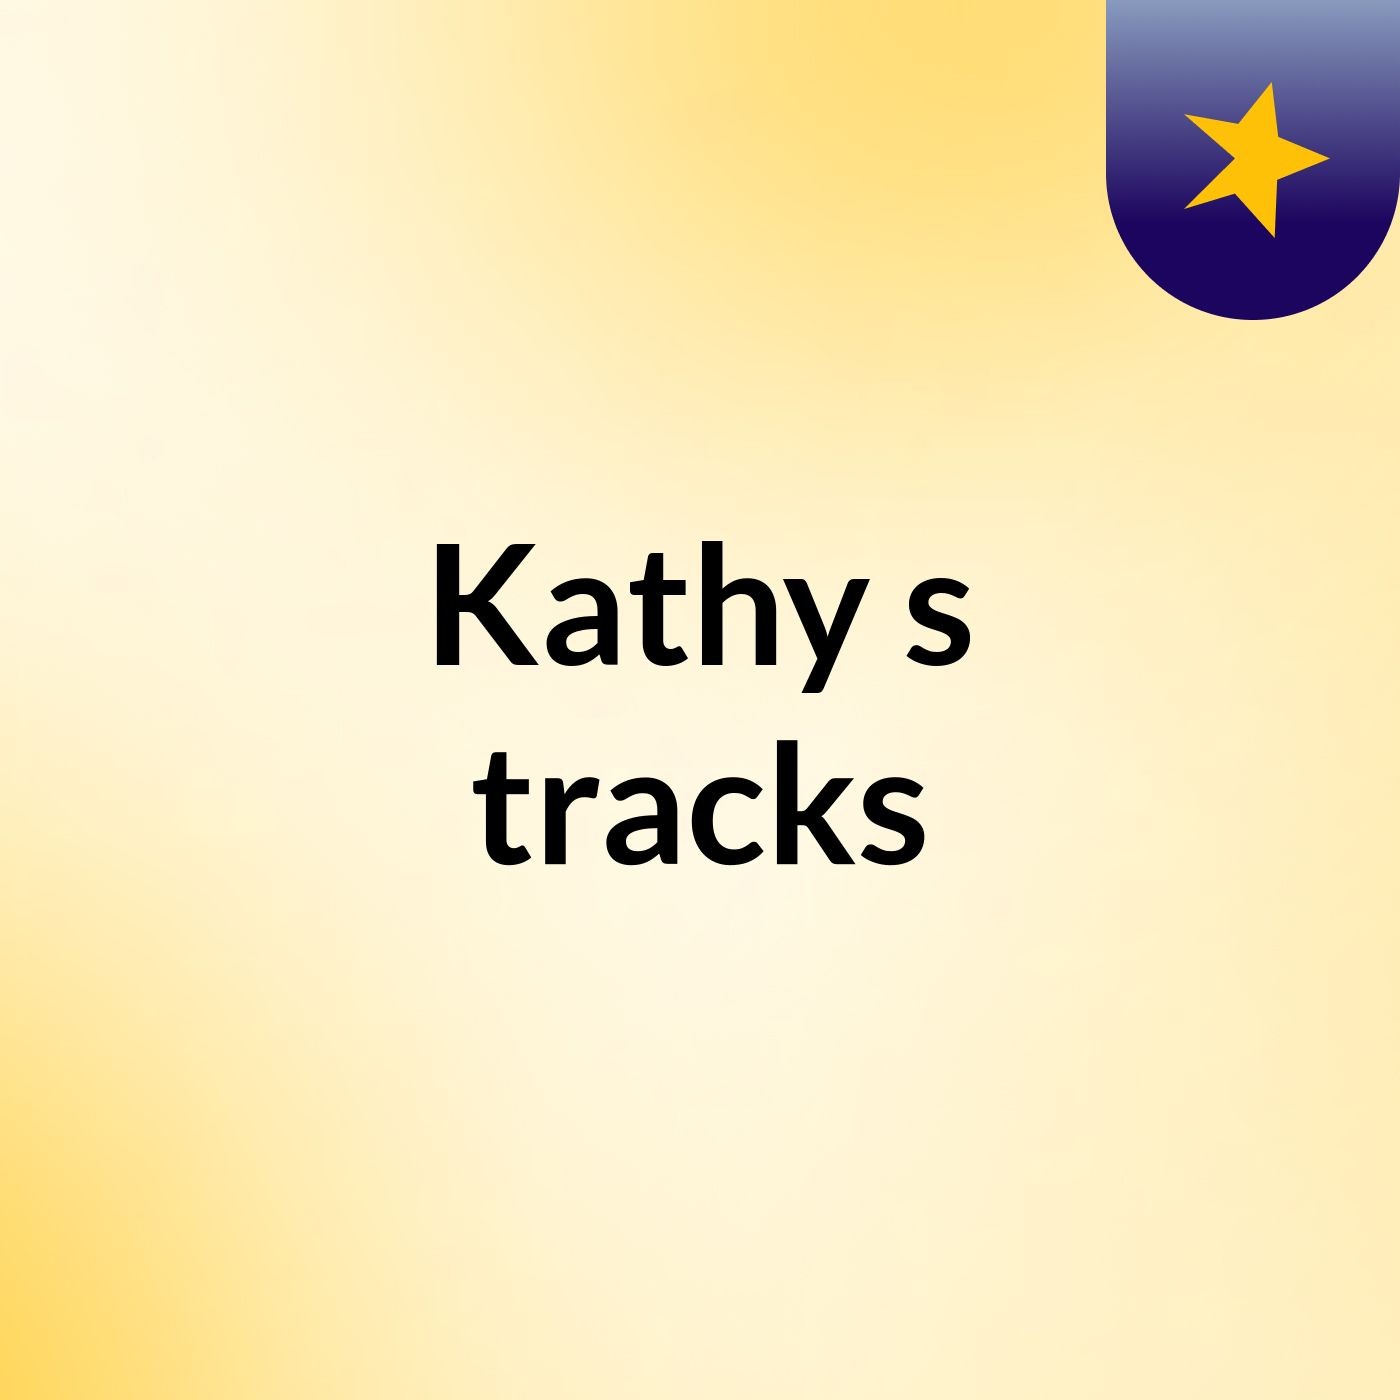 Kathy's tracks